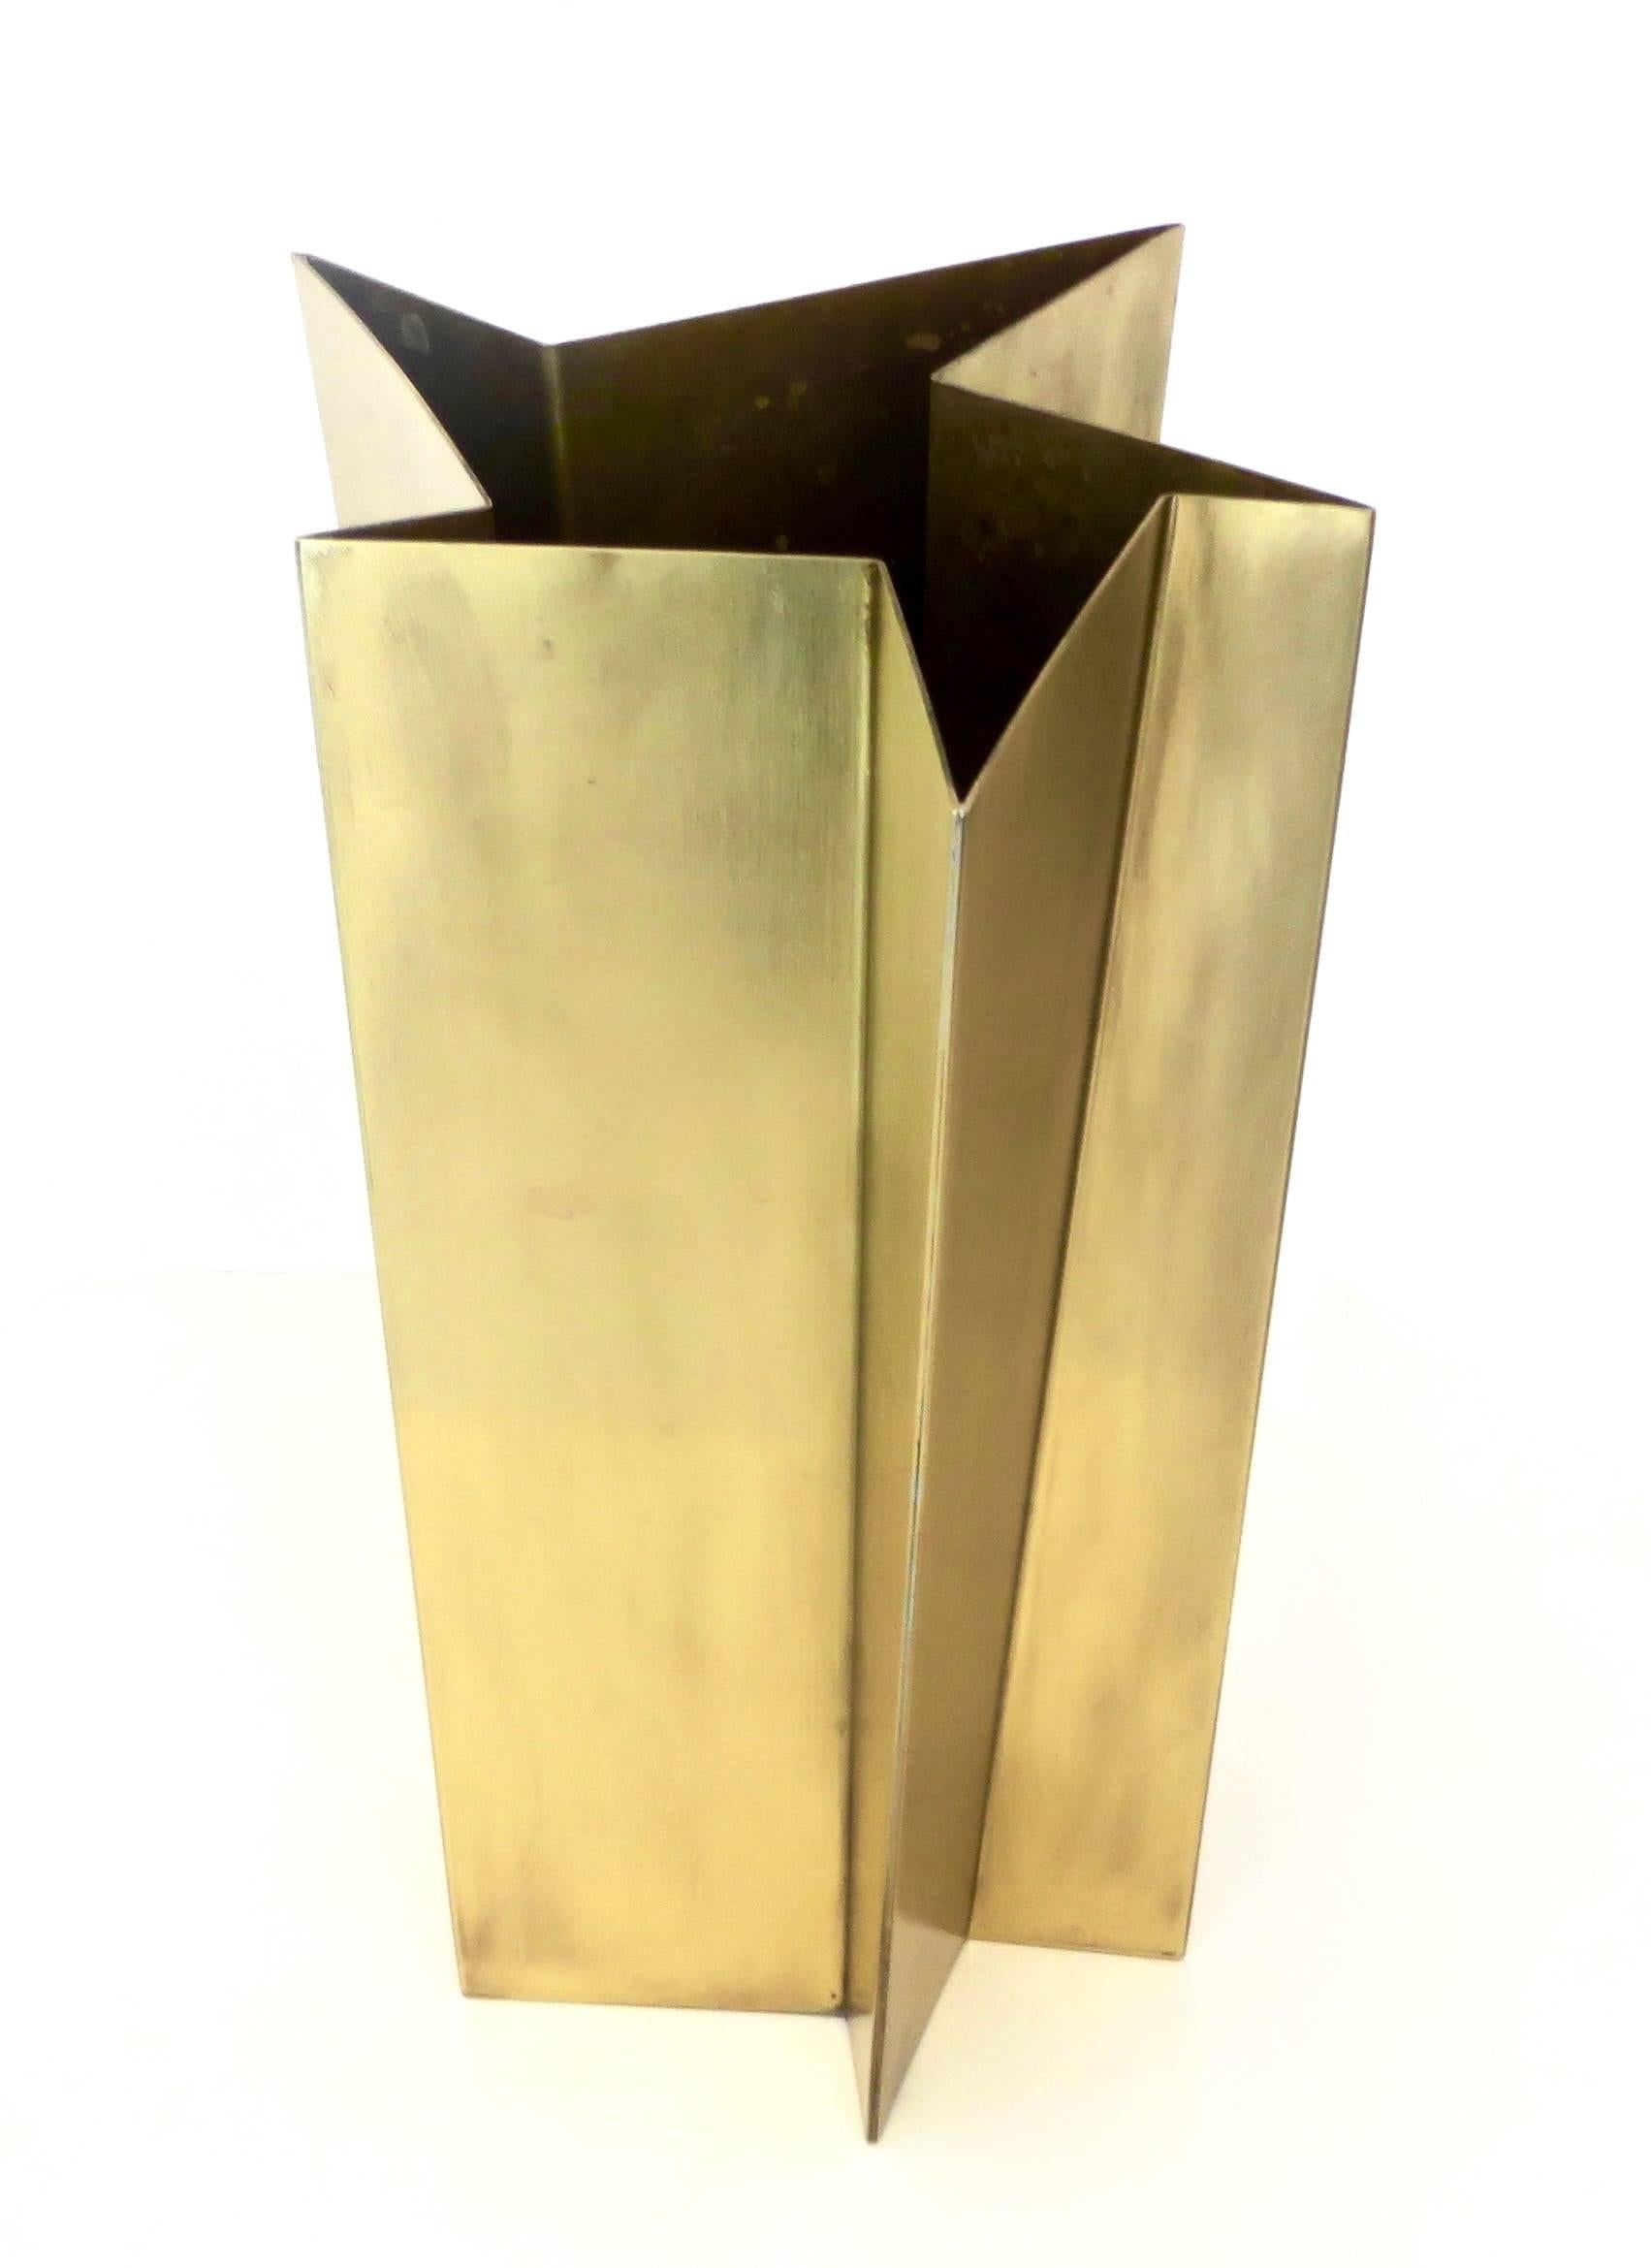 Modern Italian Star Form Brass Vase by Tommaso Salocchi, Studio Salocchi